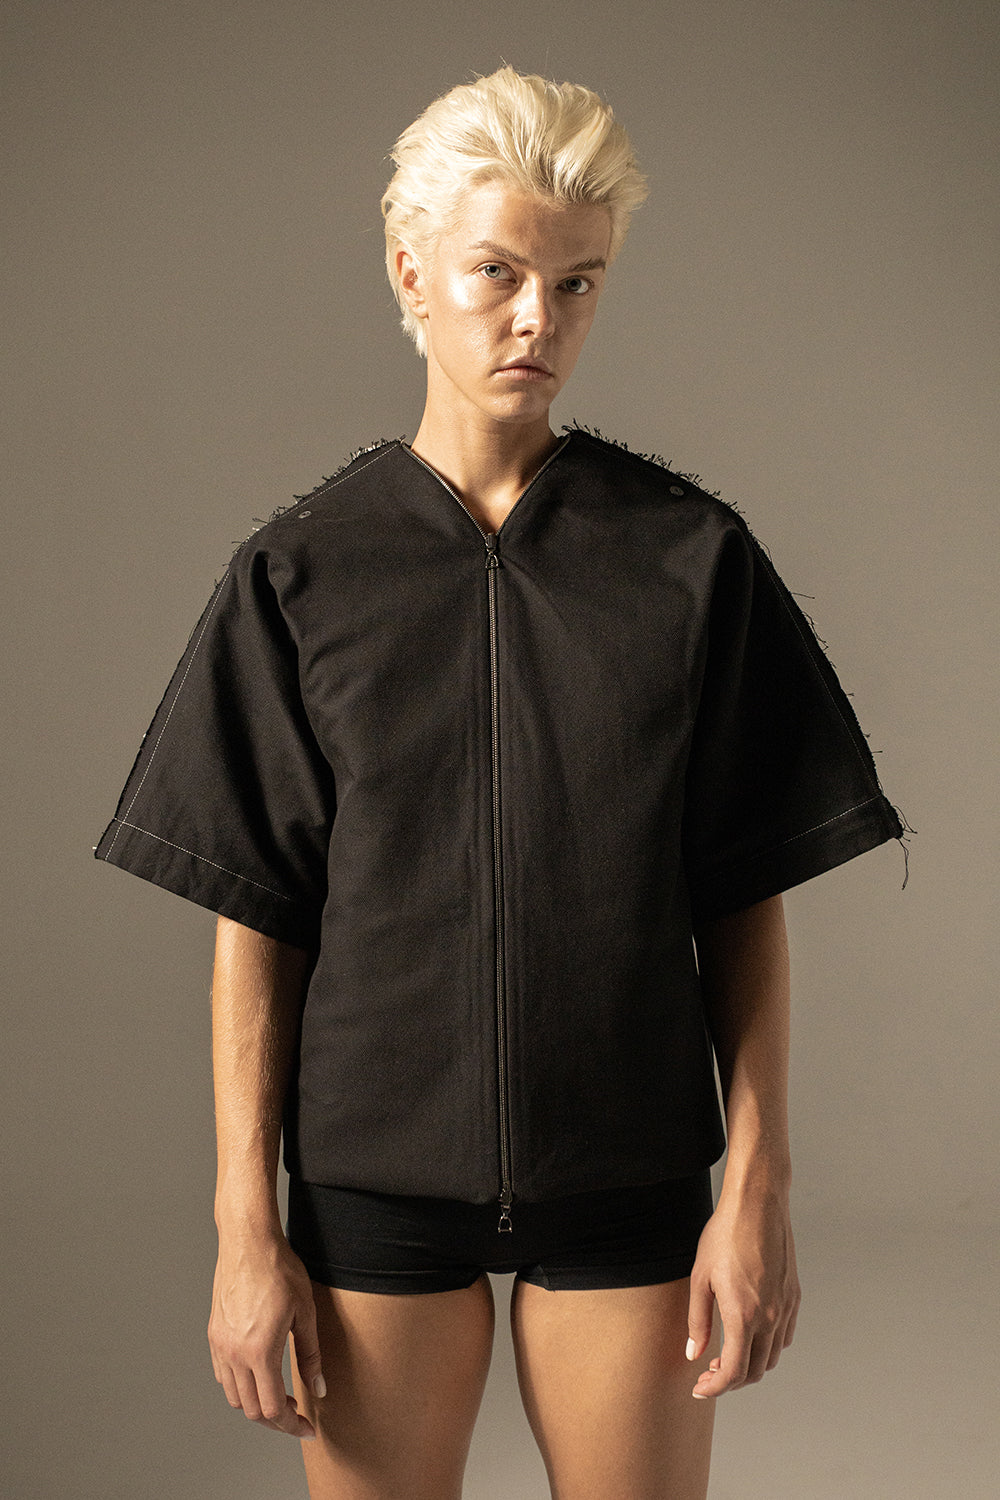 DOUBLE-FACED 13-Way Transforming Piece: Jumpsuit / Coat / Dress / Jacket / Hat / Bag